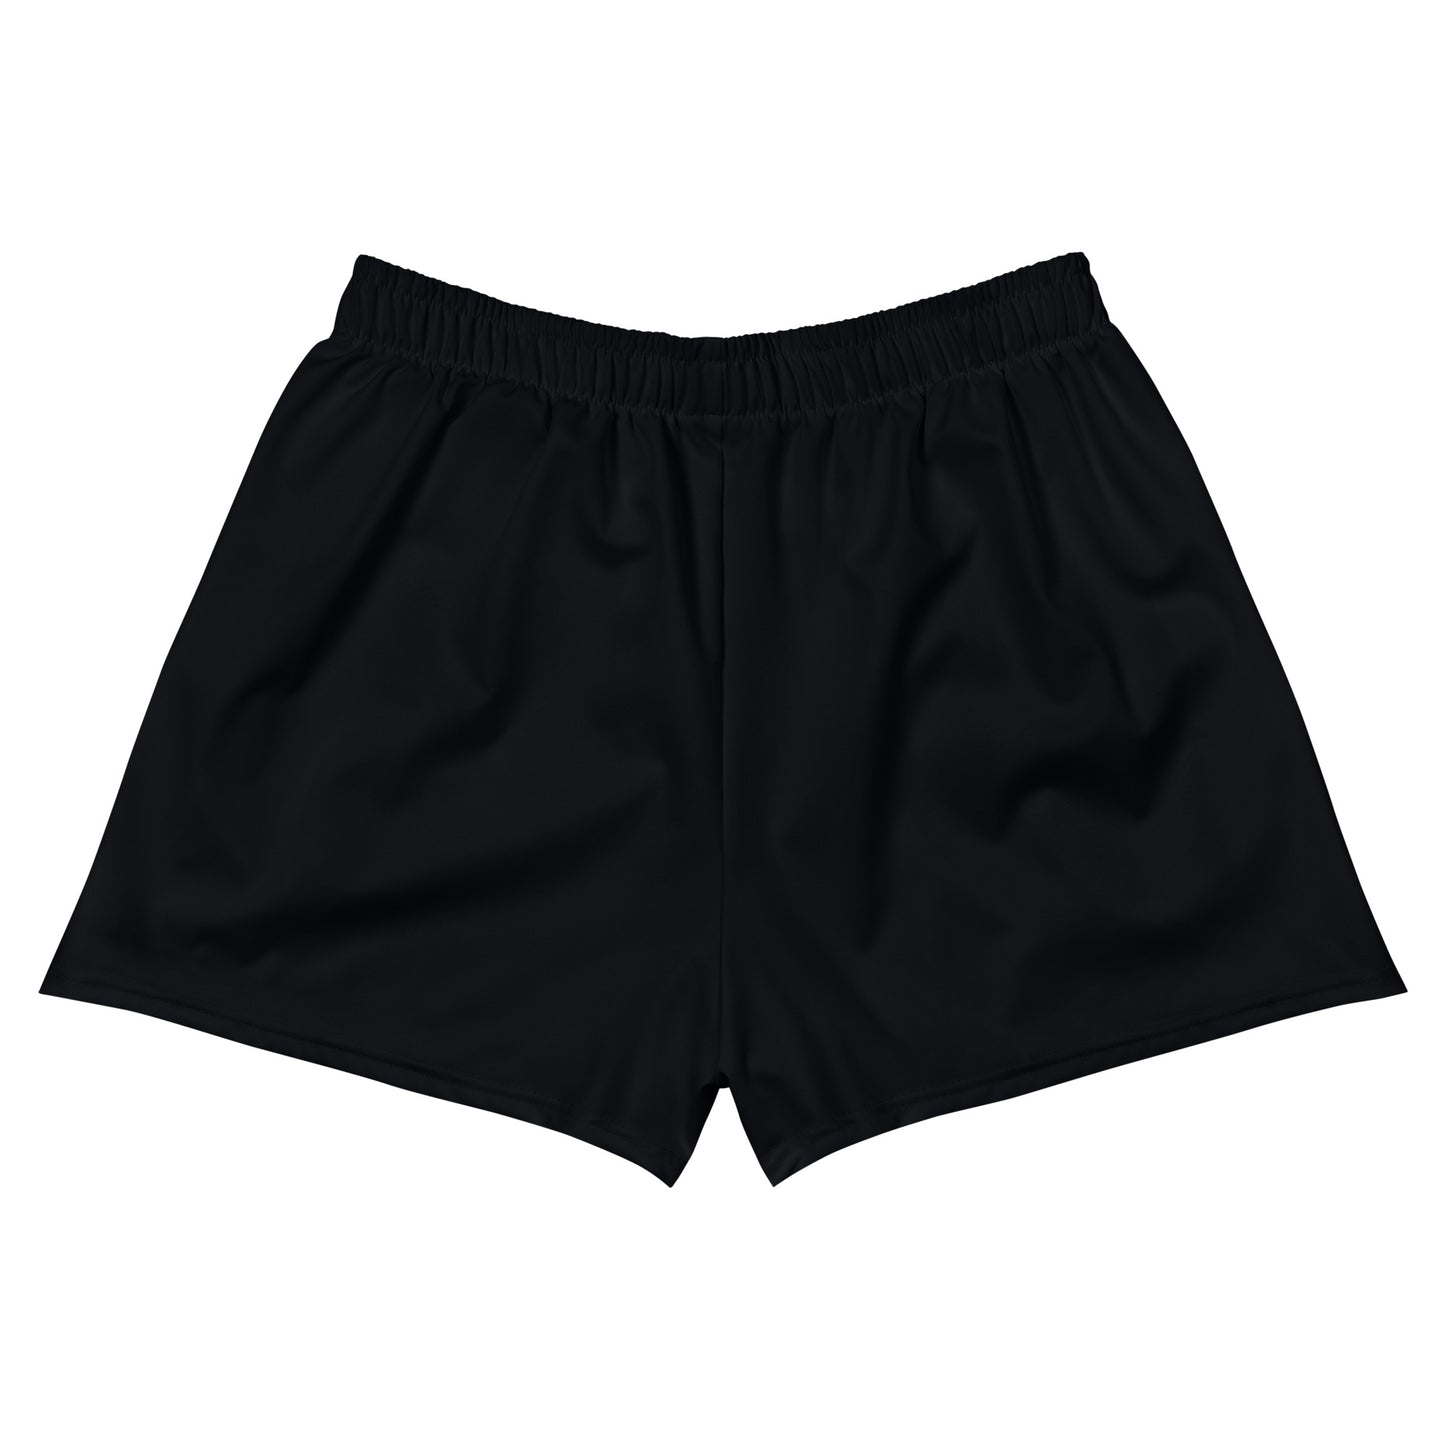 MILF in Progress Athletic Shorts (Short)